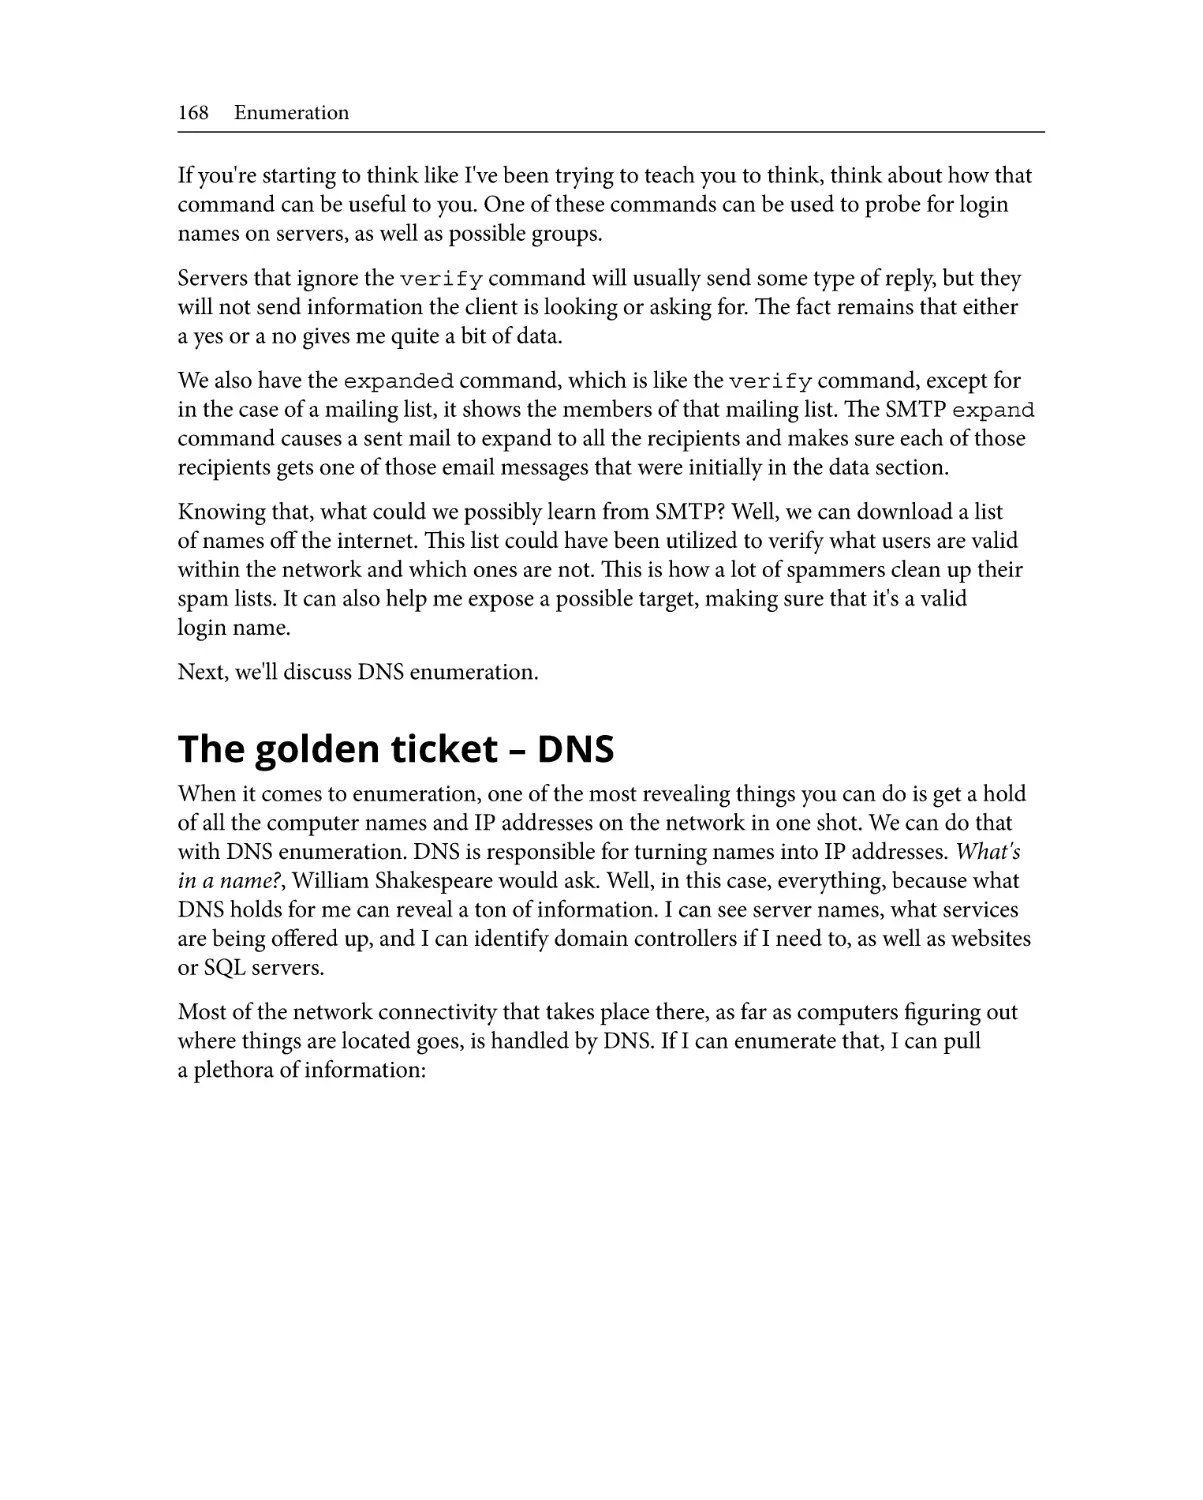 The golden ticket – DNS